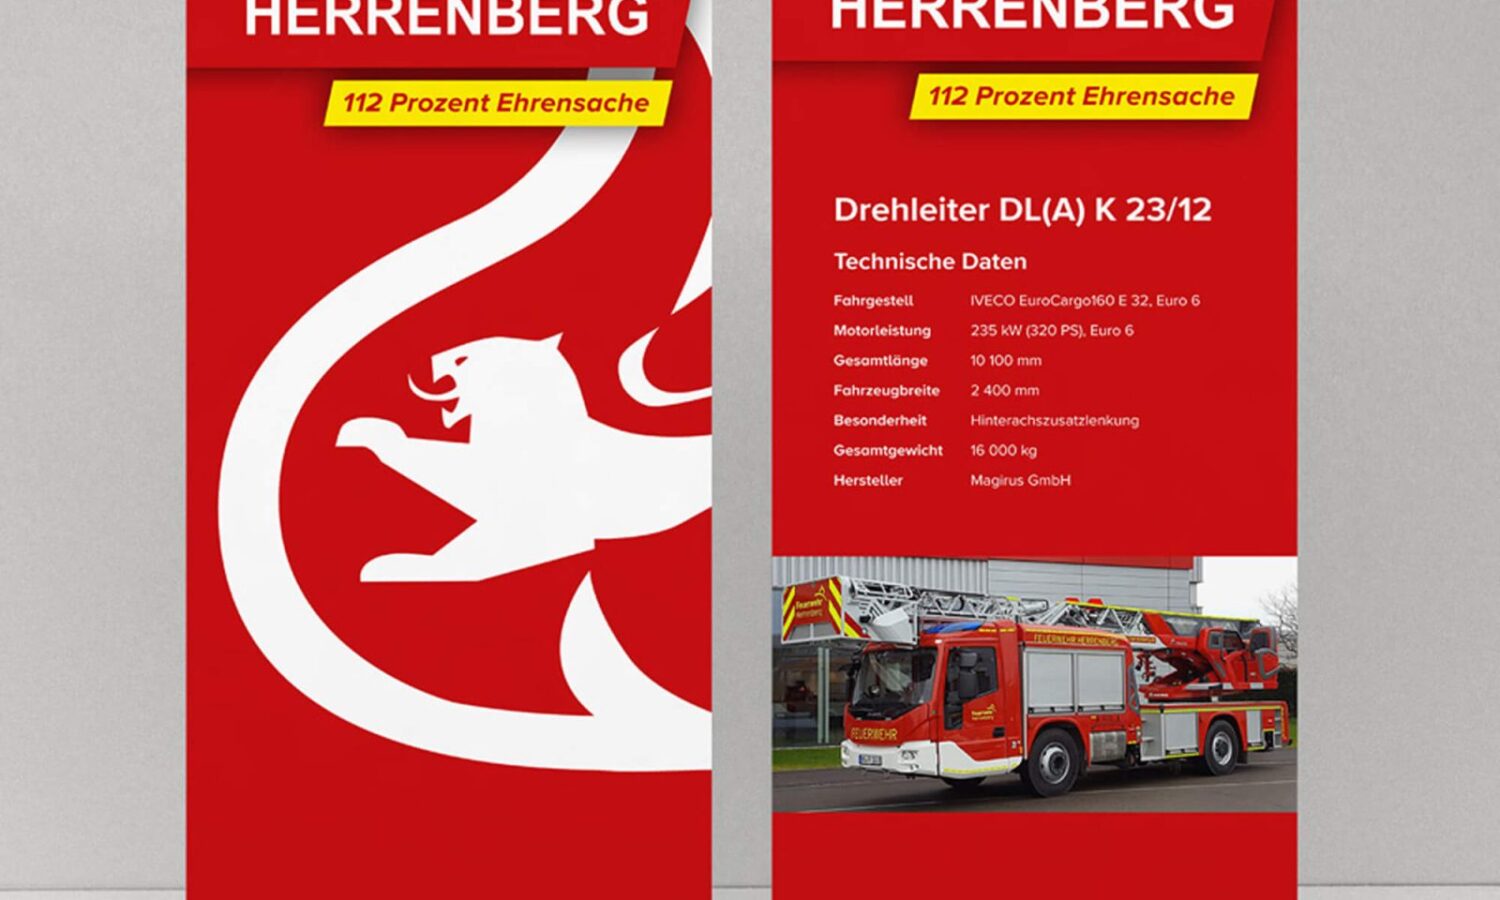 Feuerwehr Herrenberg Rollup